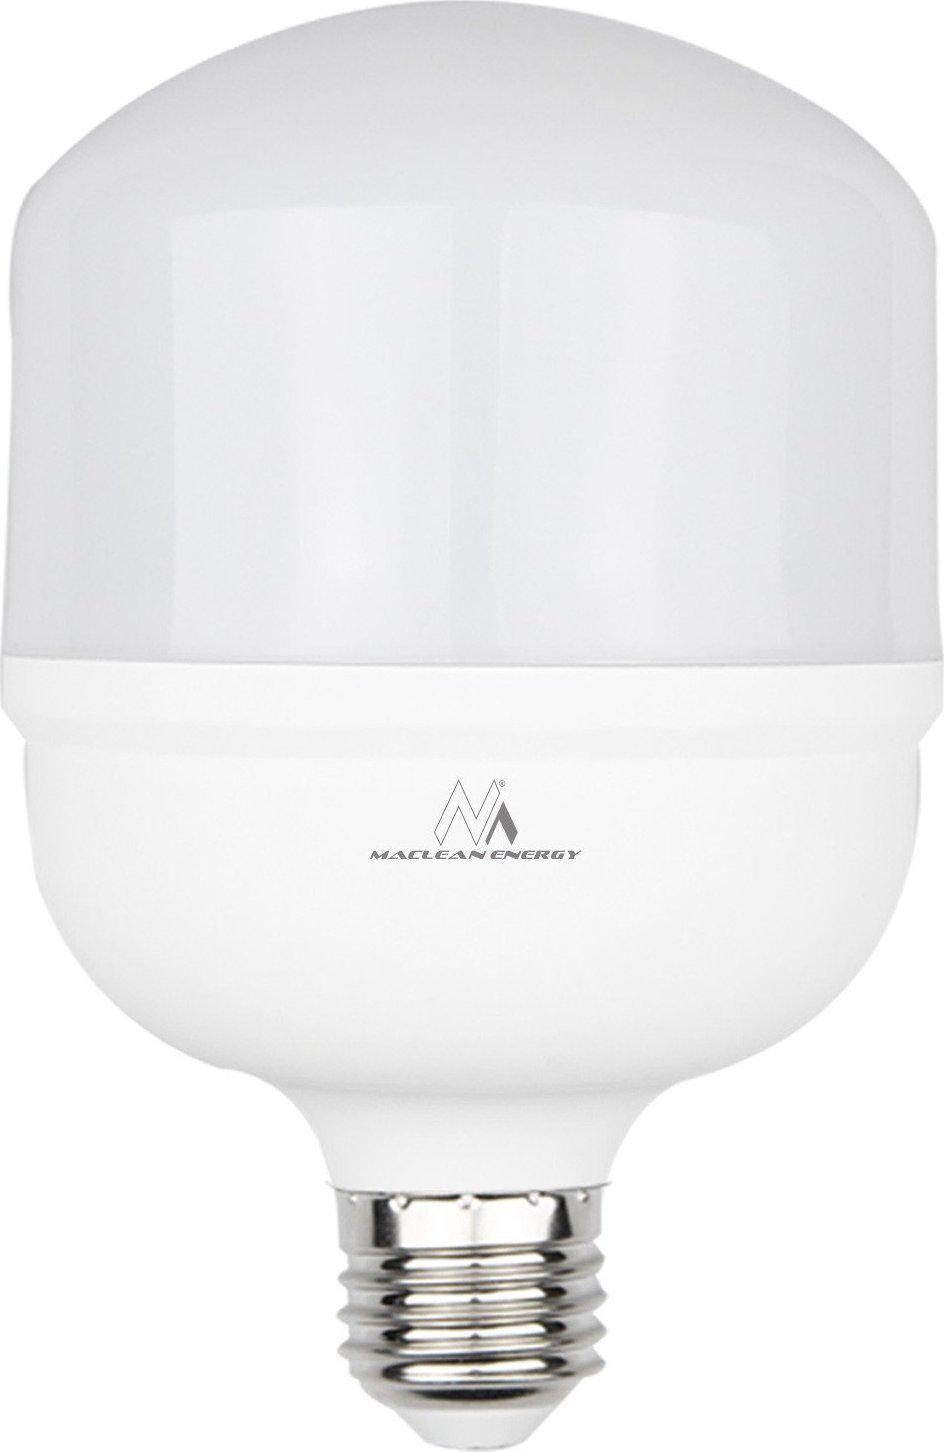 Bec LED Maclean Maclean MCE303 CW E27, 38W, 220-240V AC, alb rece, 6500K, 3990lm